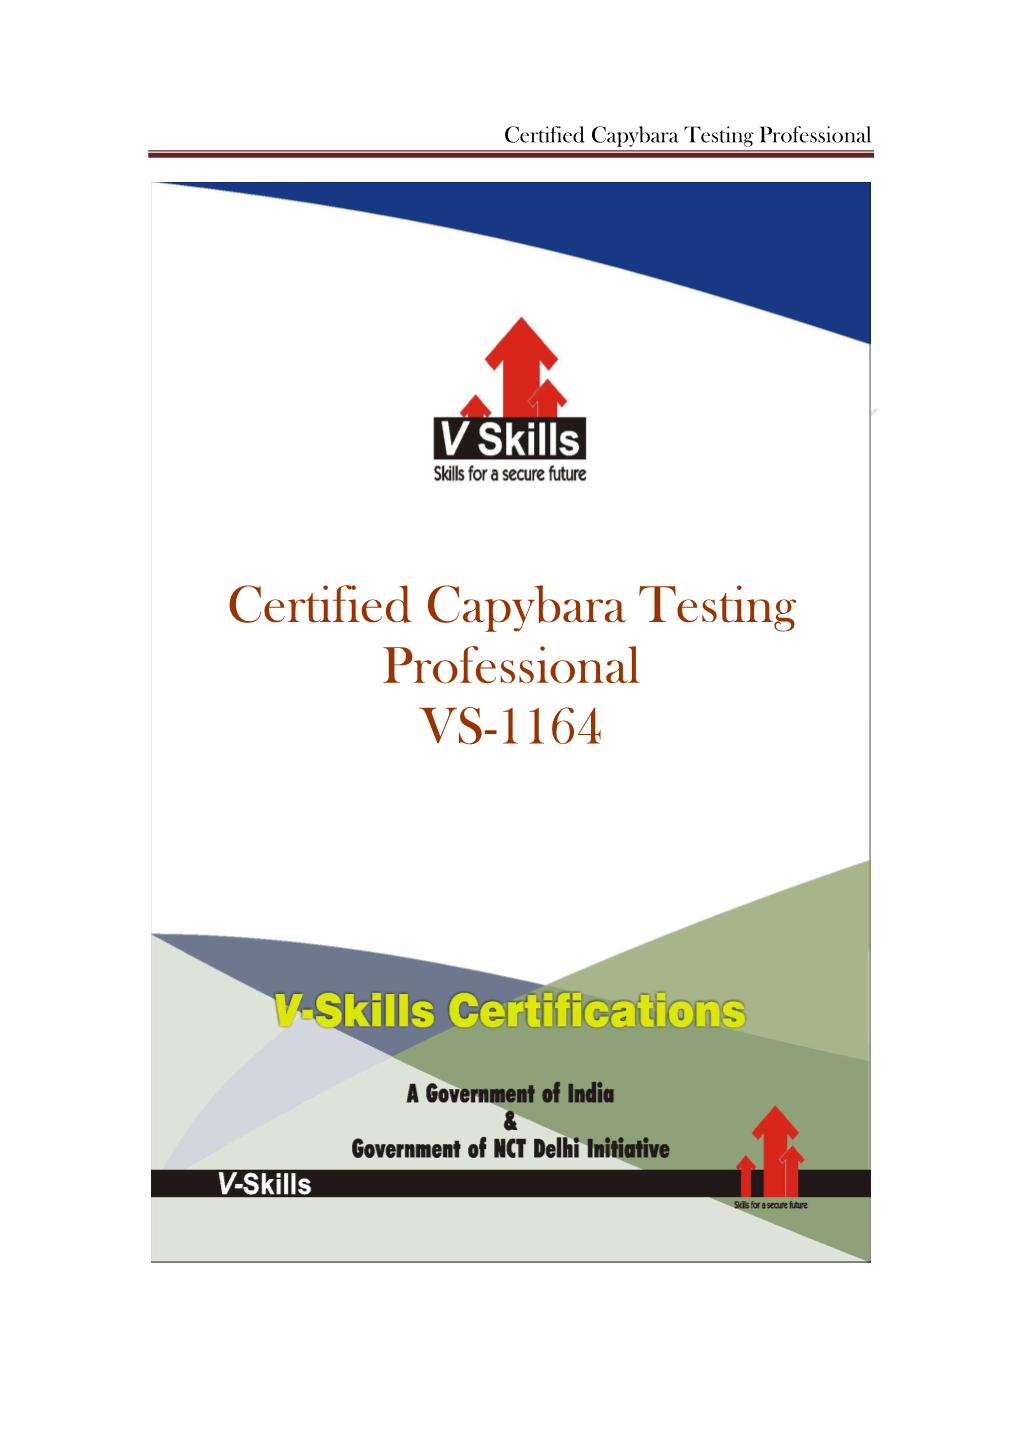 VS-1164 Certified Capybara Testing Professional Sample Reading Material